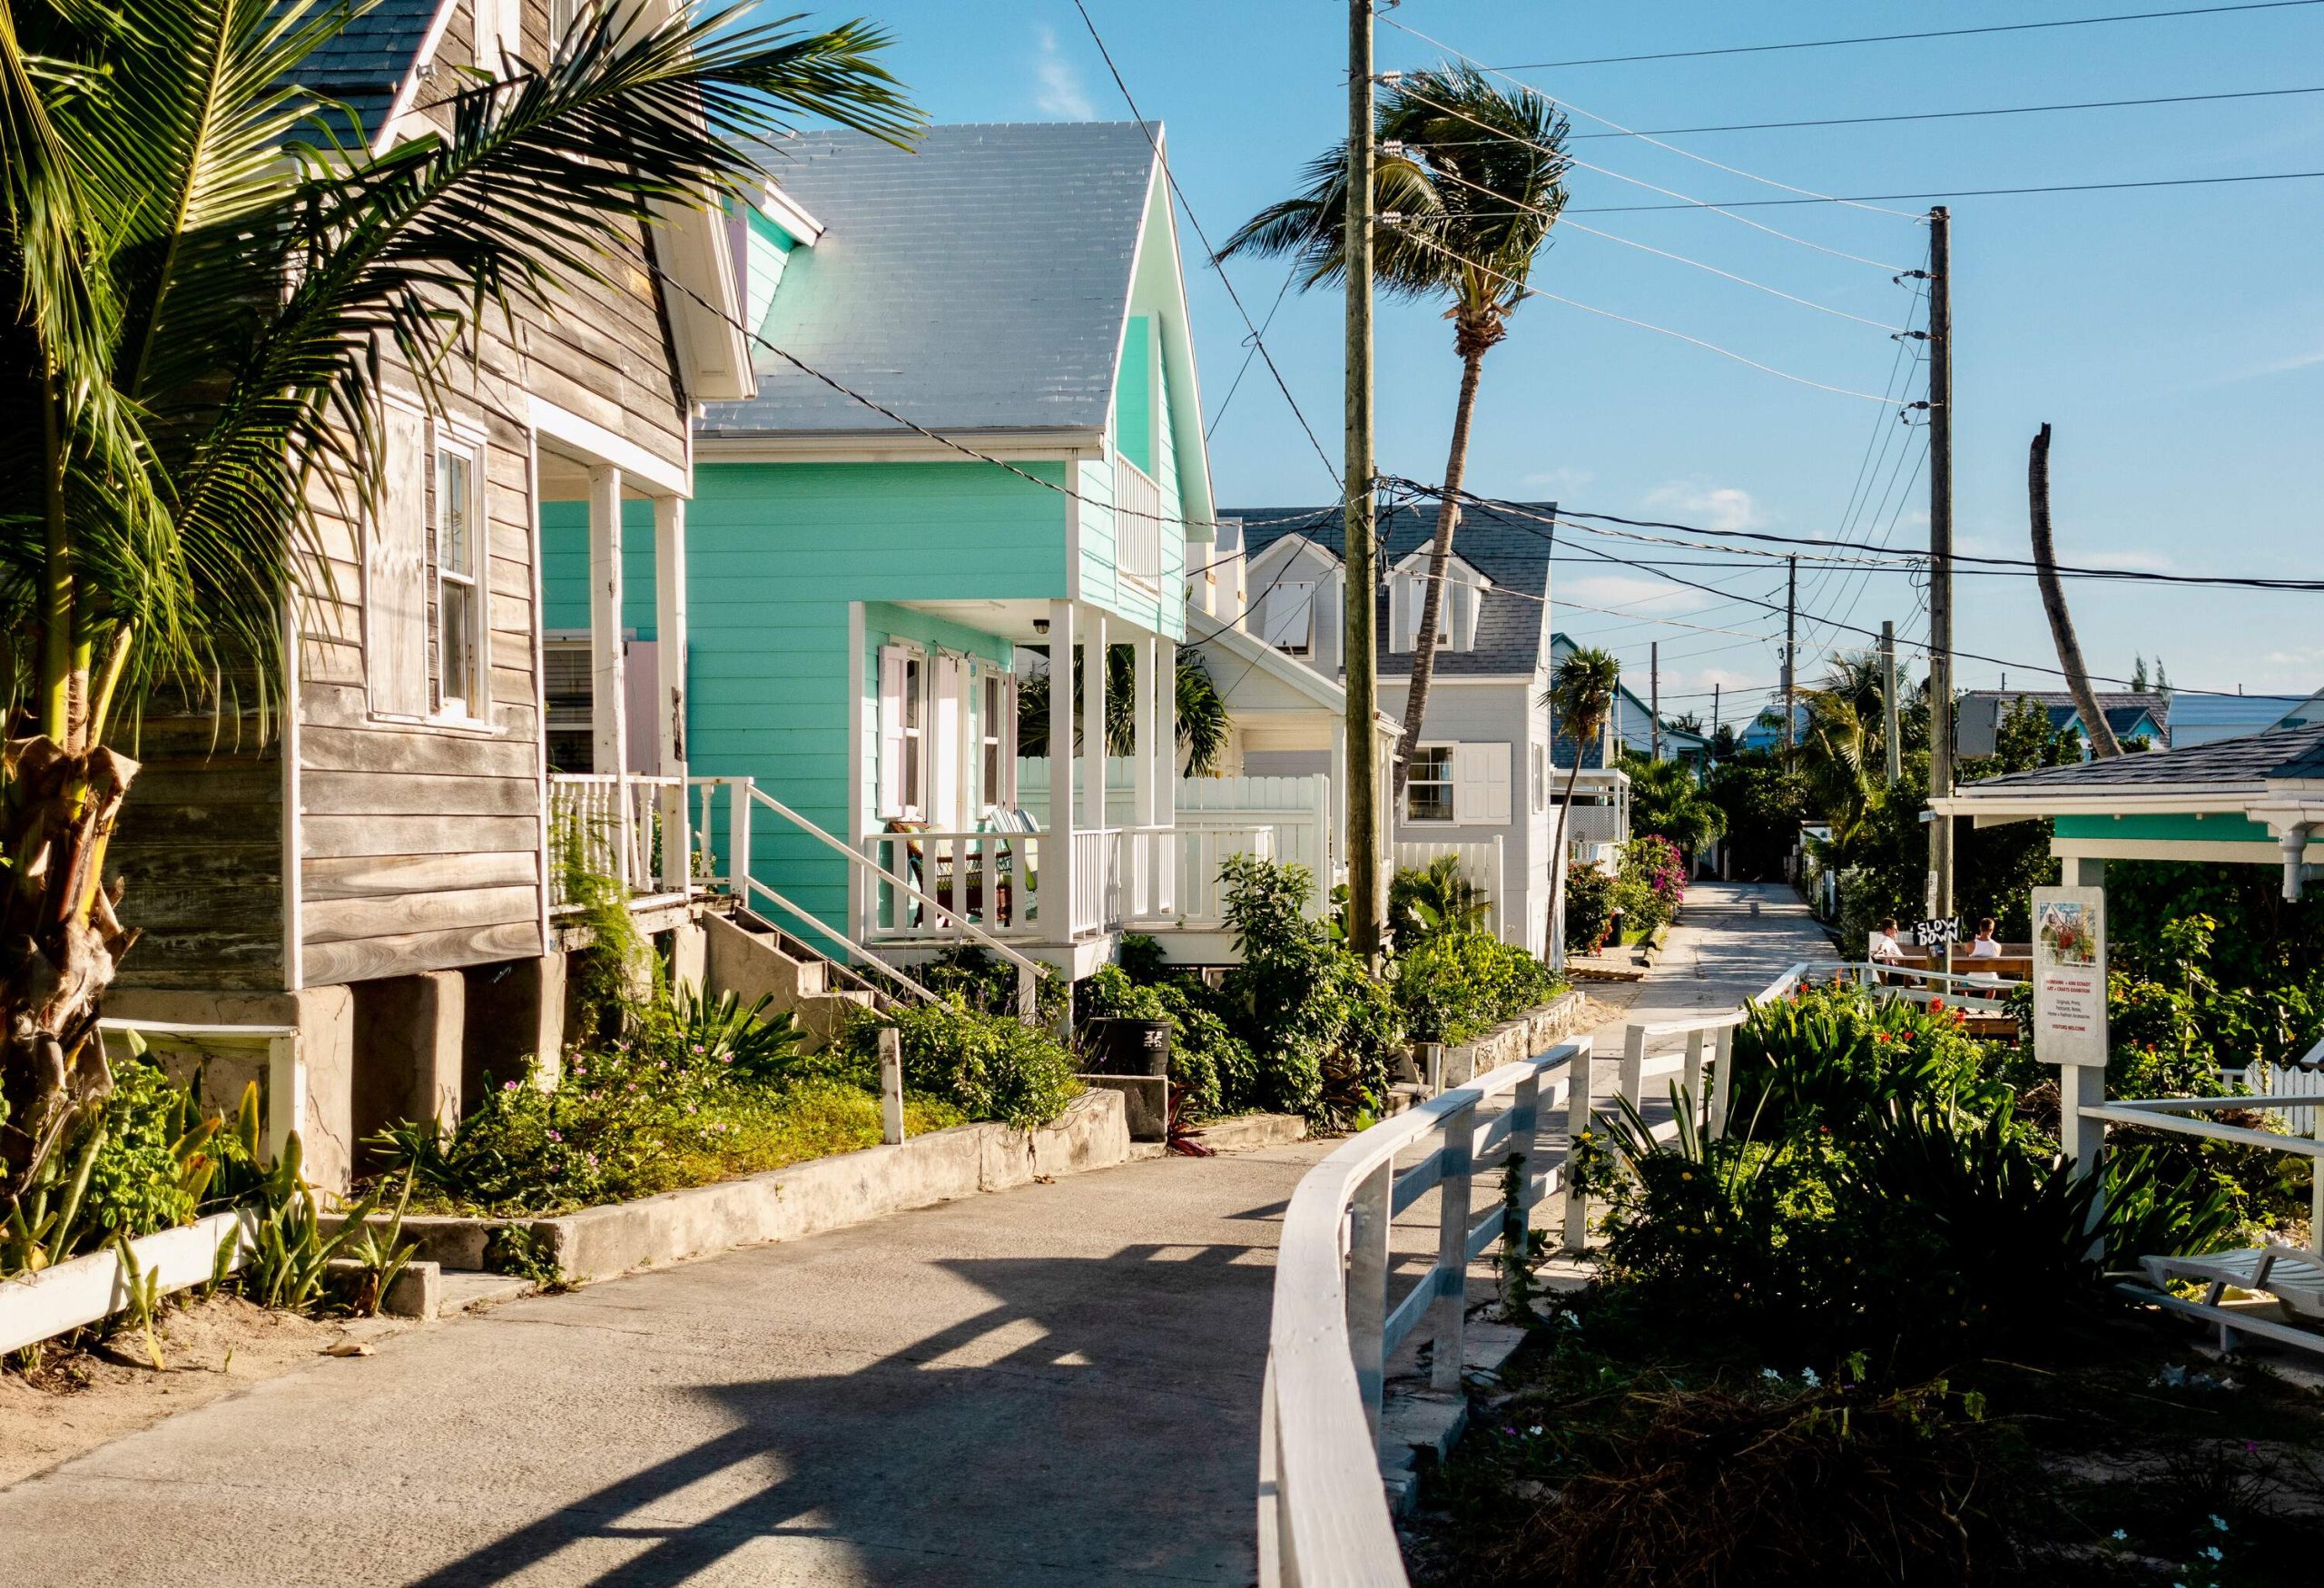 Streets of Hope Town Abaco Island Bahamas, where many go for vacation